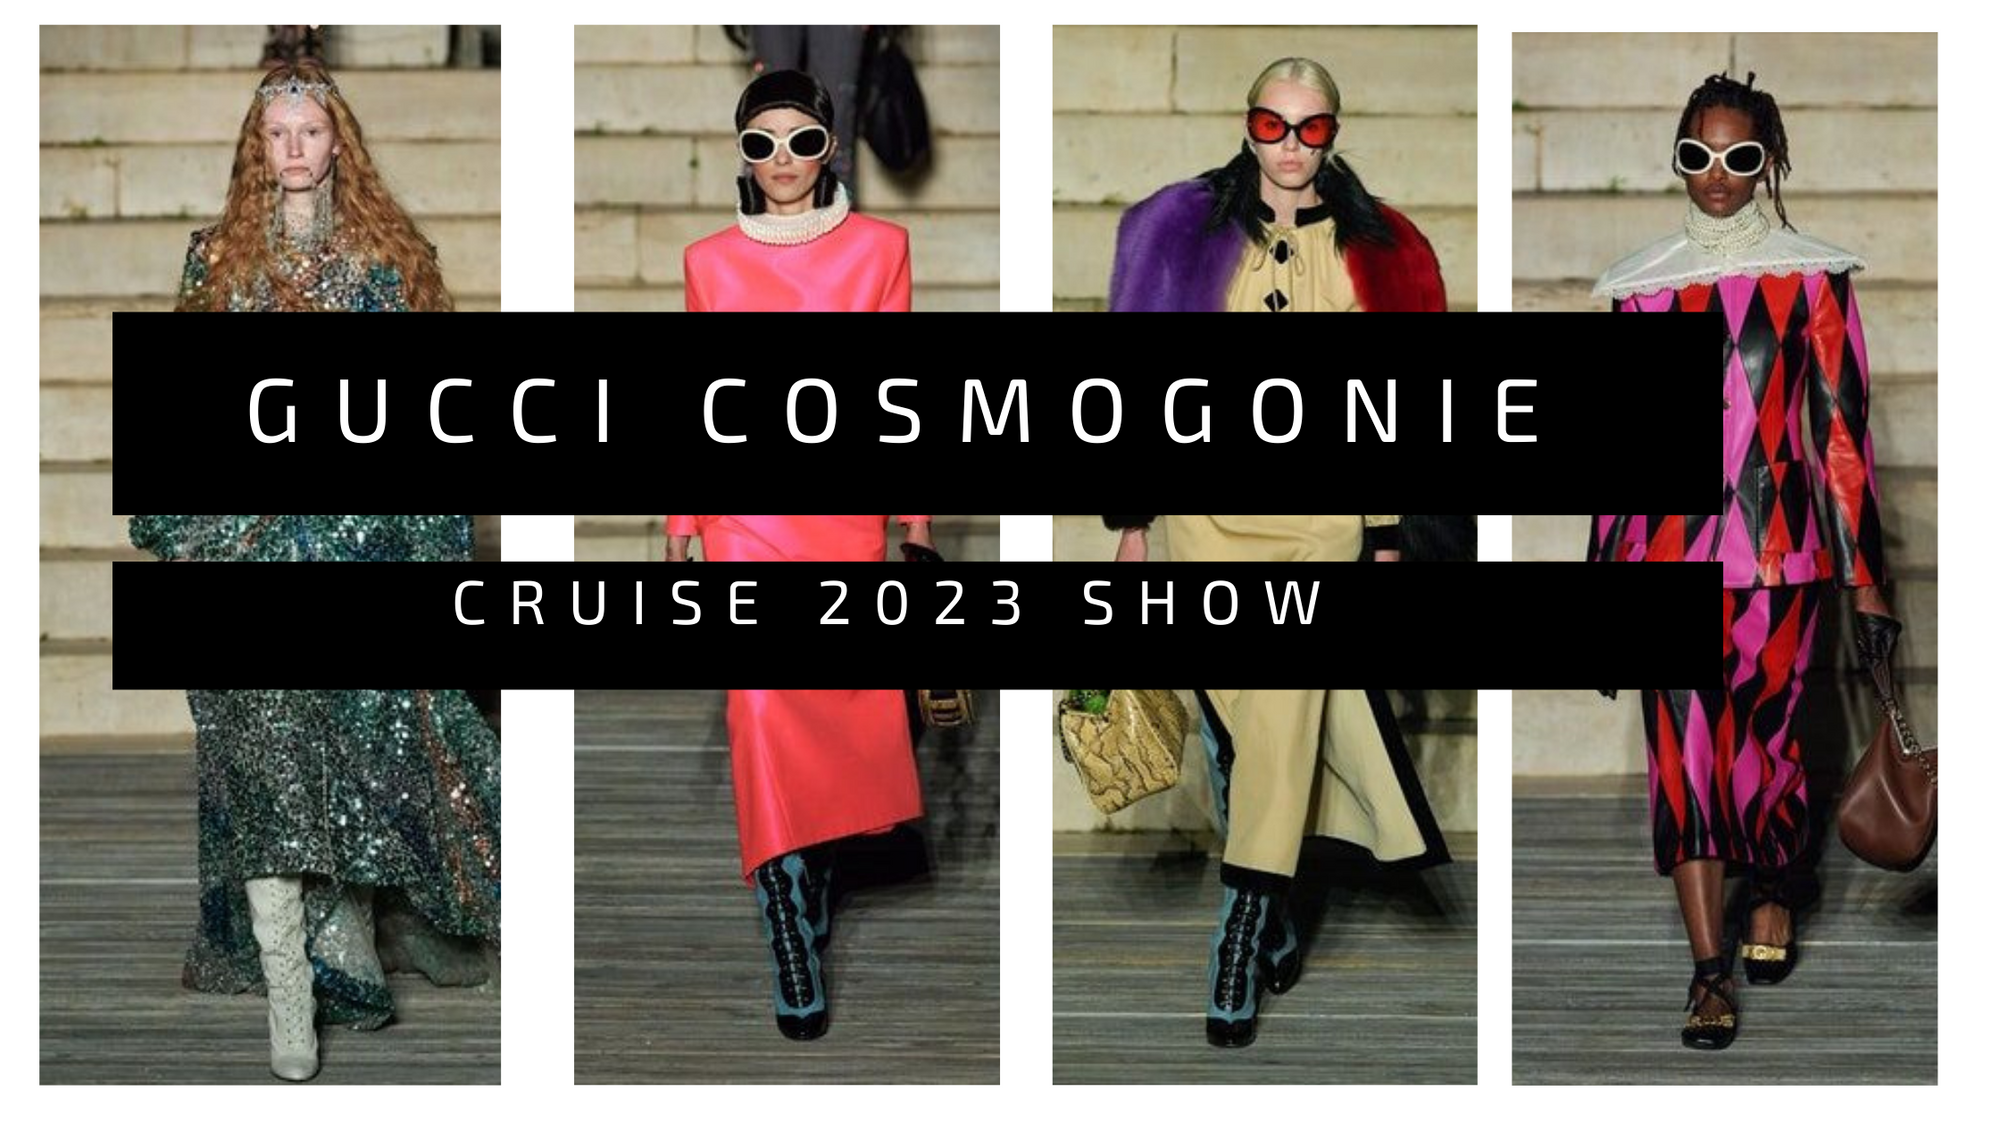 Gucci Cosmogonie Cruise 2023 Show